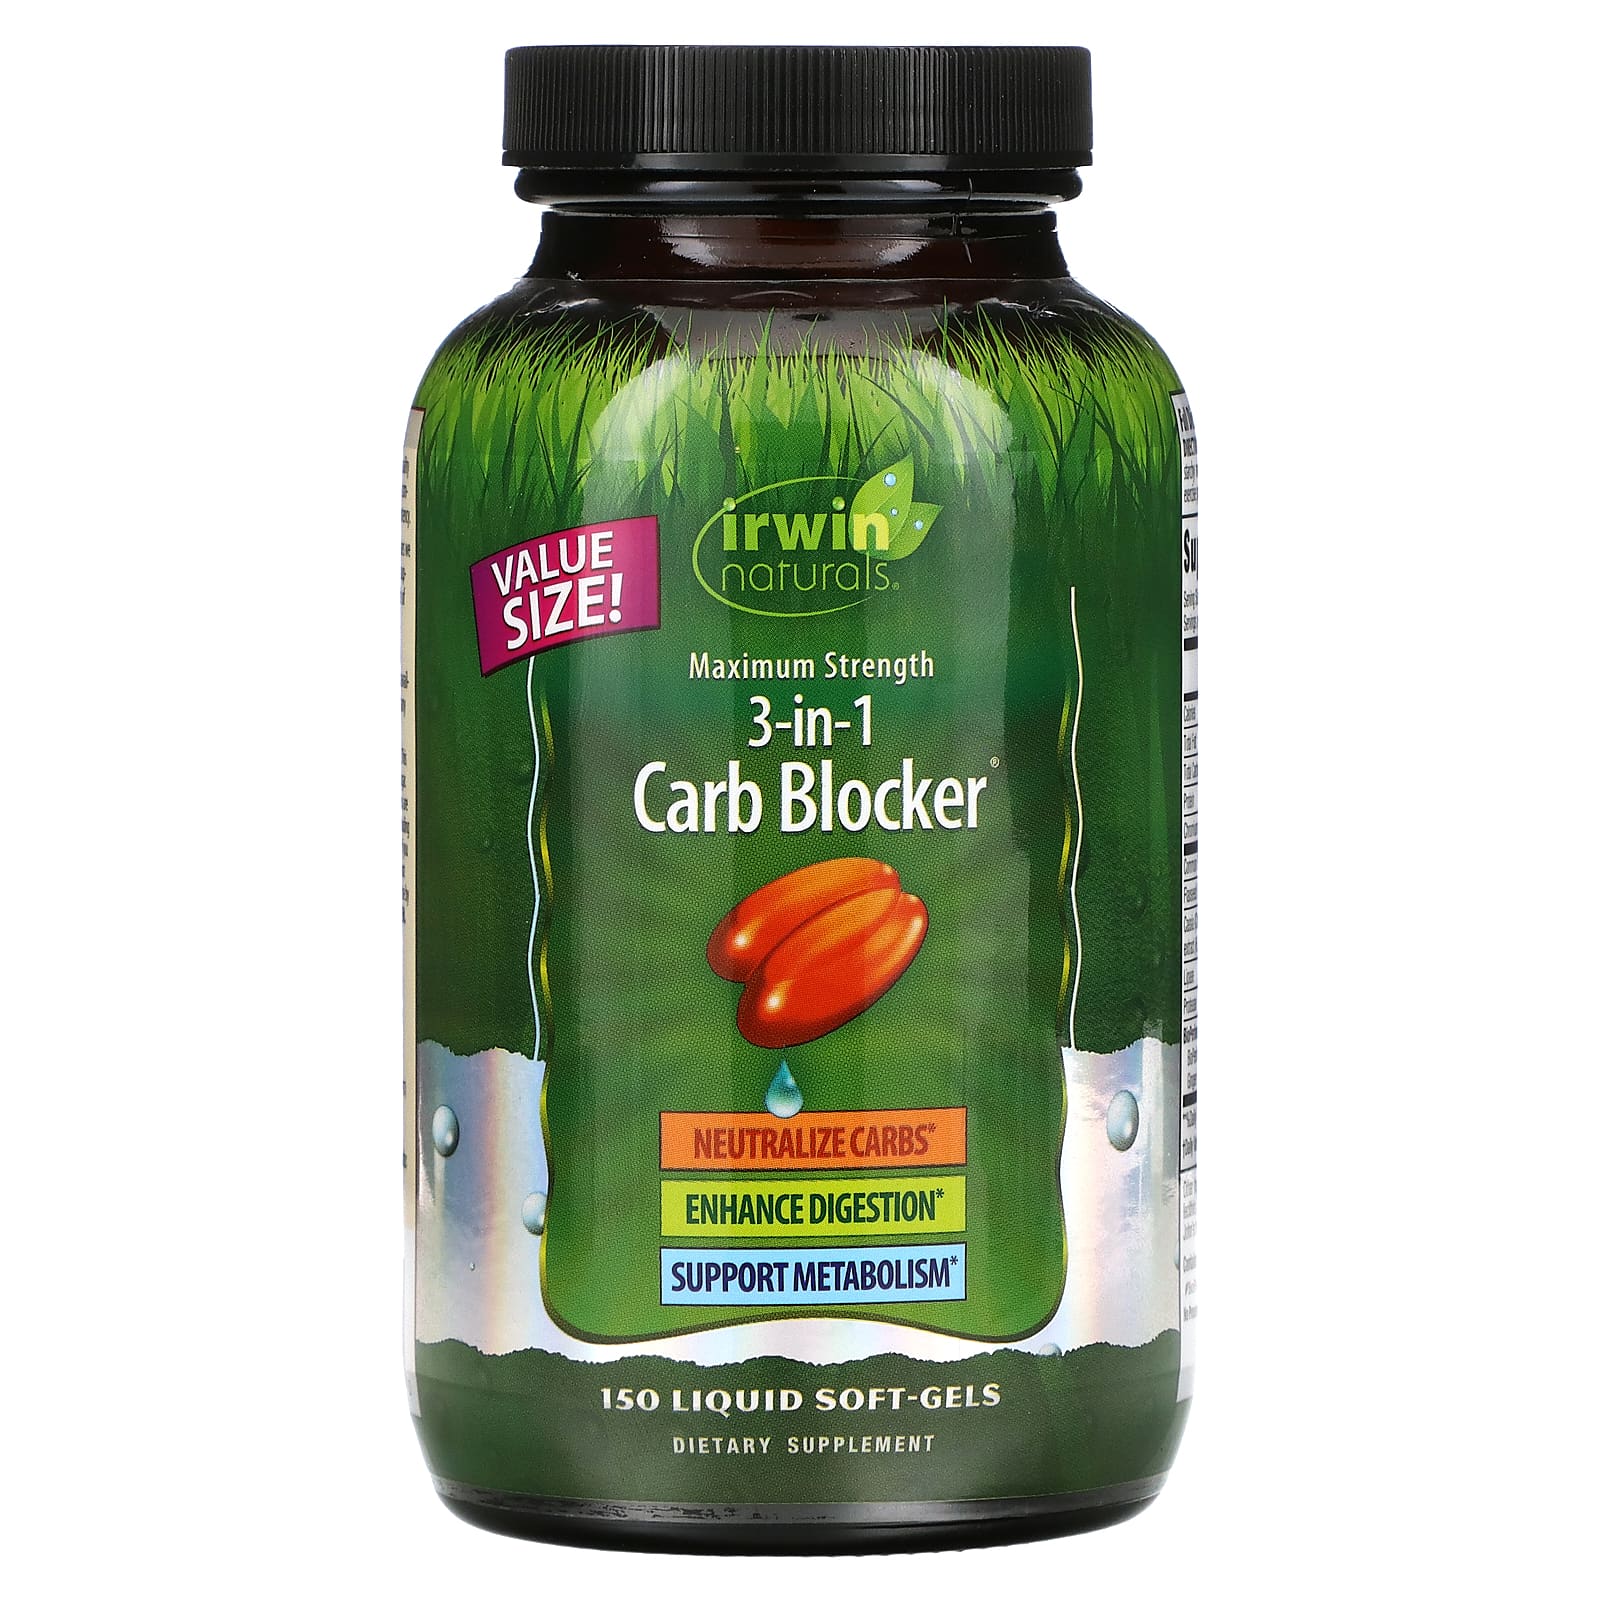 Irwin Naturals Weight Loss Supplements Maximum Strength 3-in-1 Carb Blocker